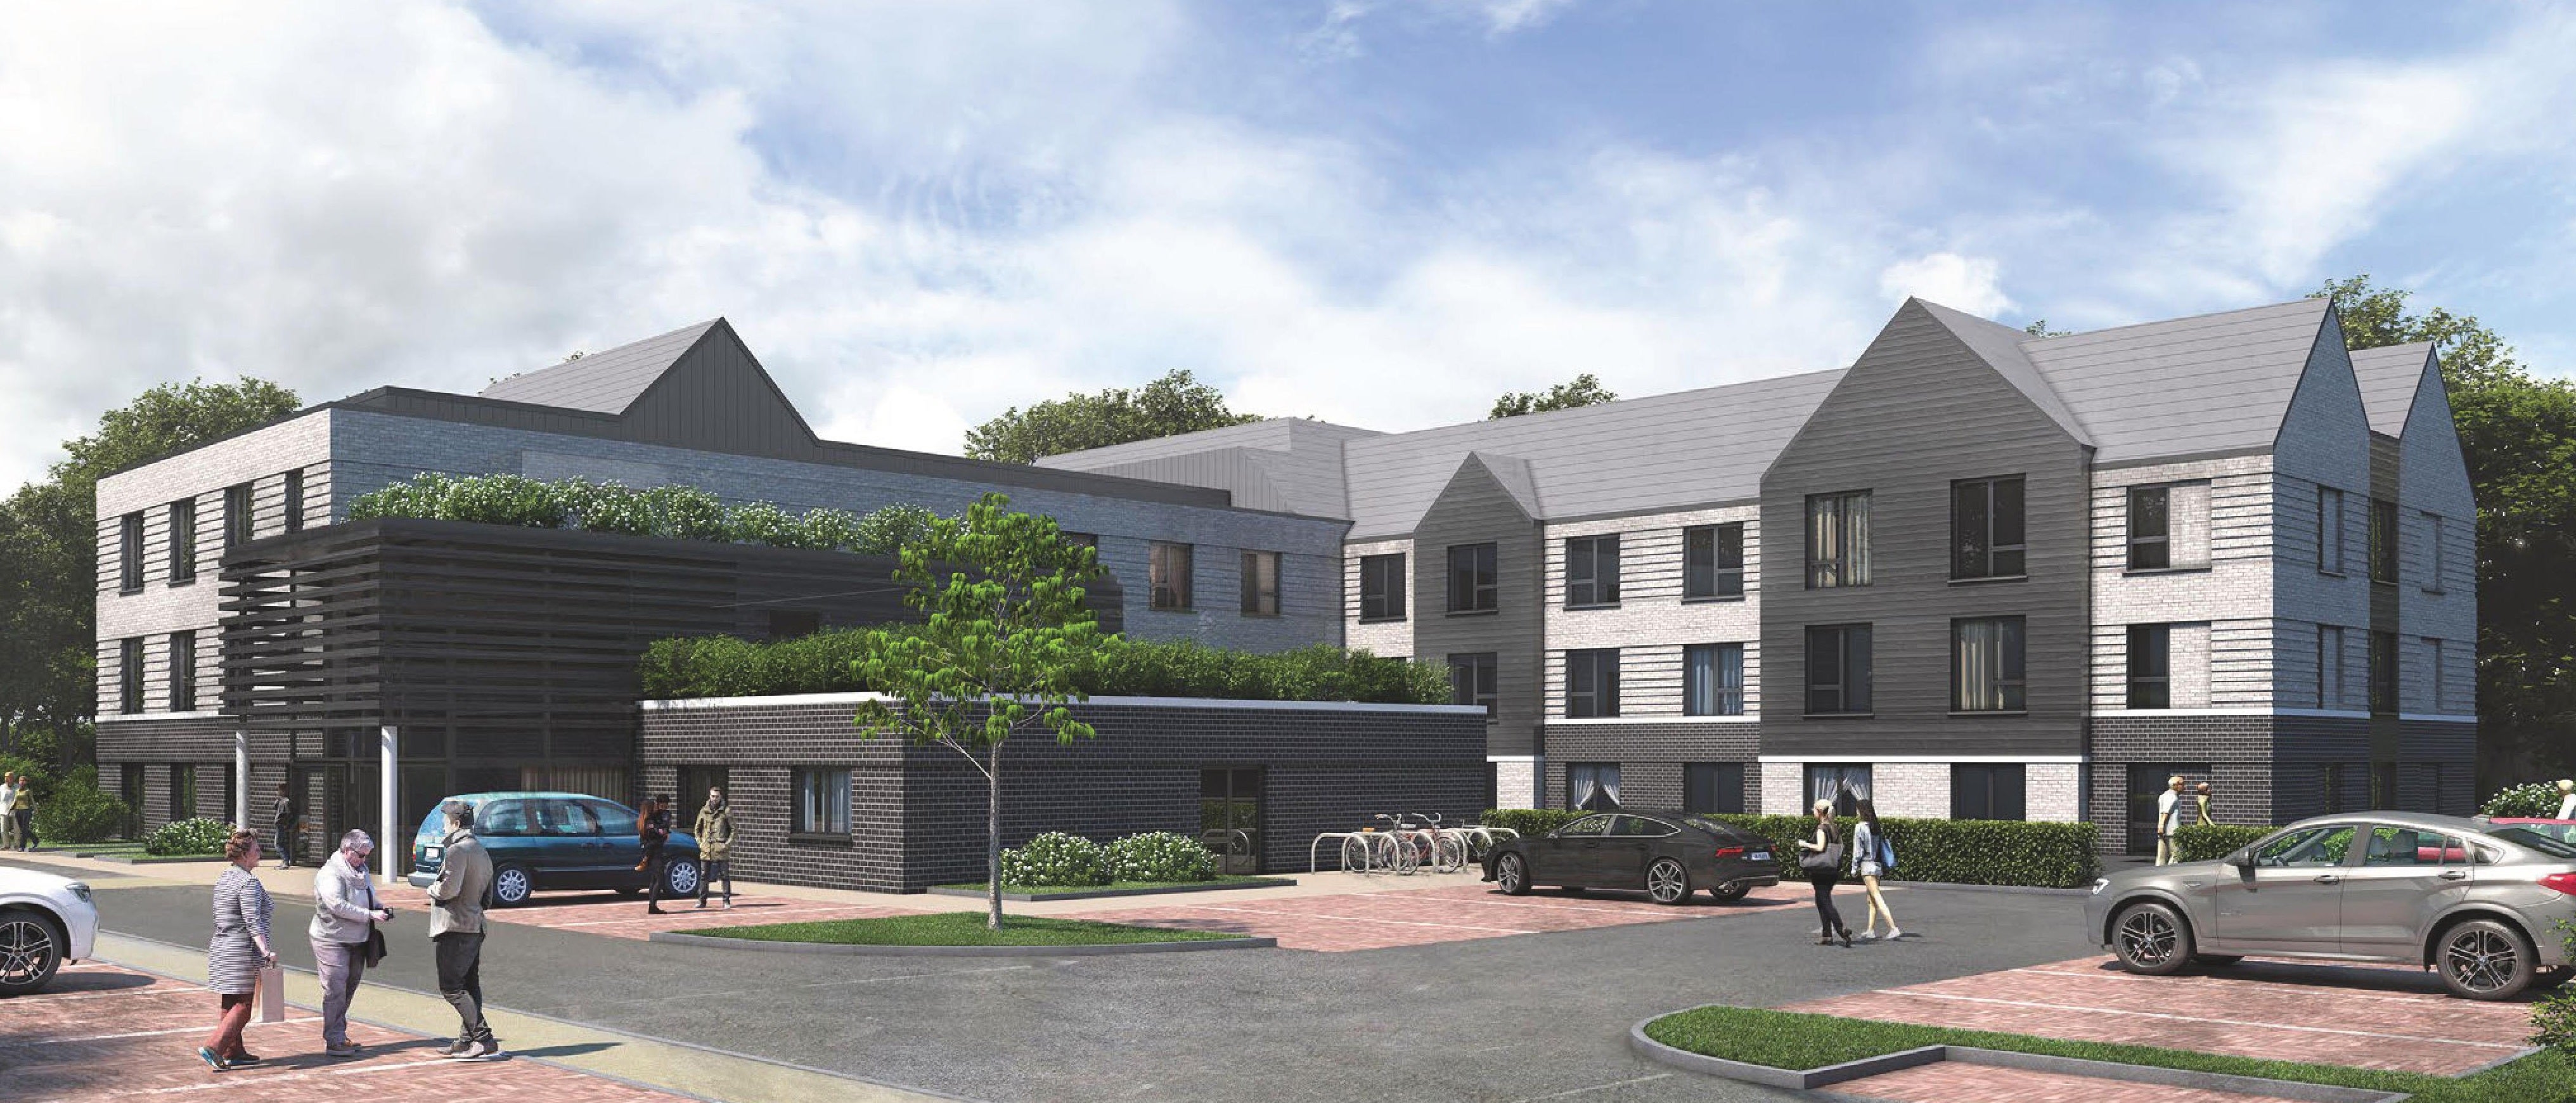 Proposed care home development scheme in Billericay, Essex